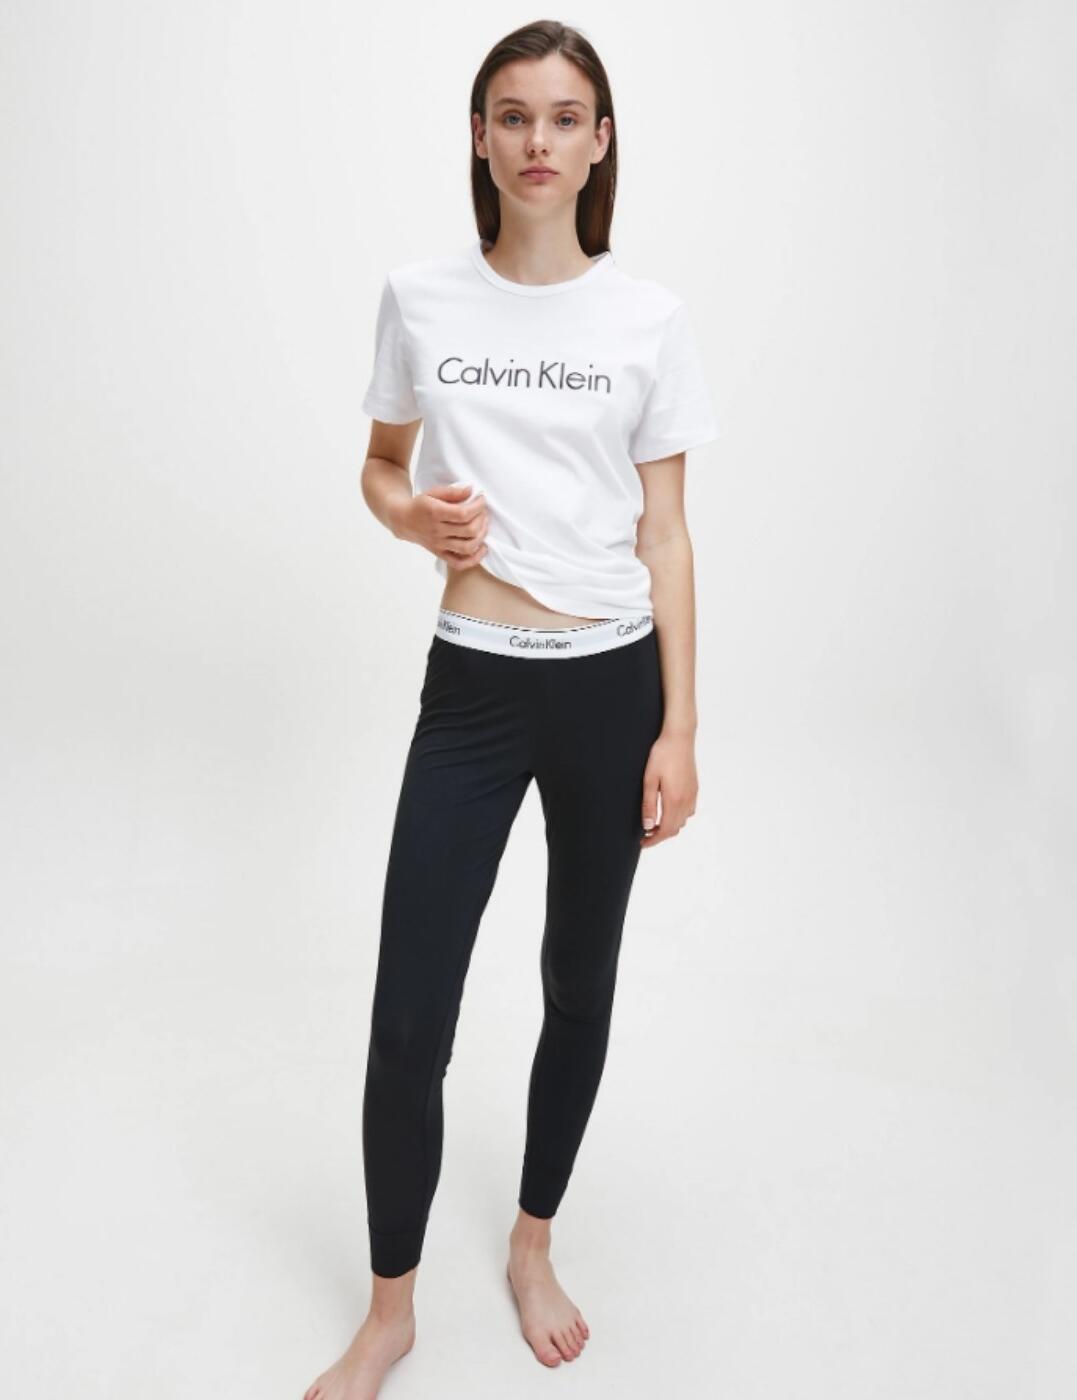 Calvin Klein Women's Modern Cotton Legging